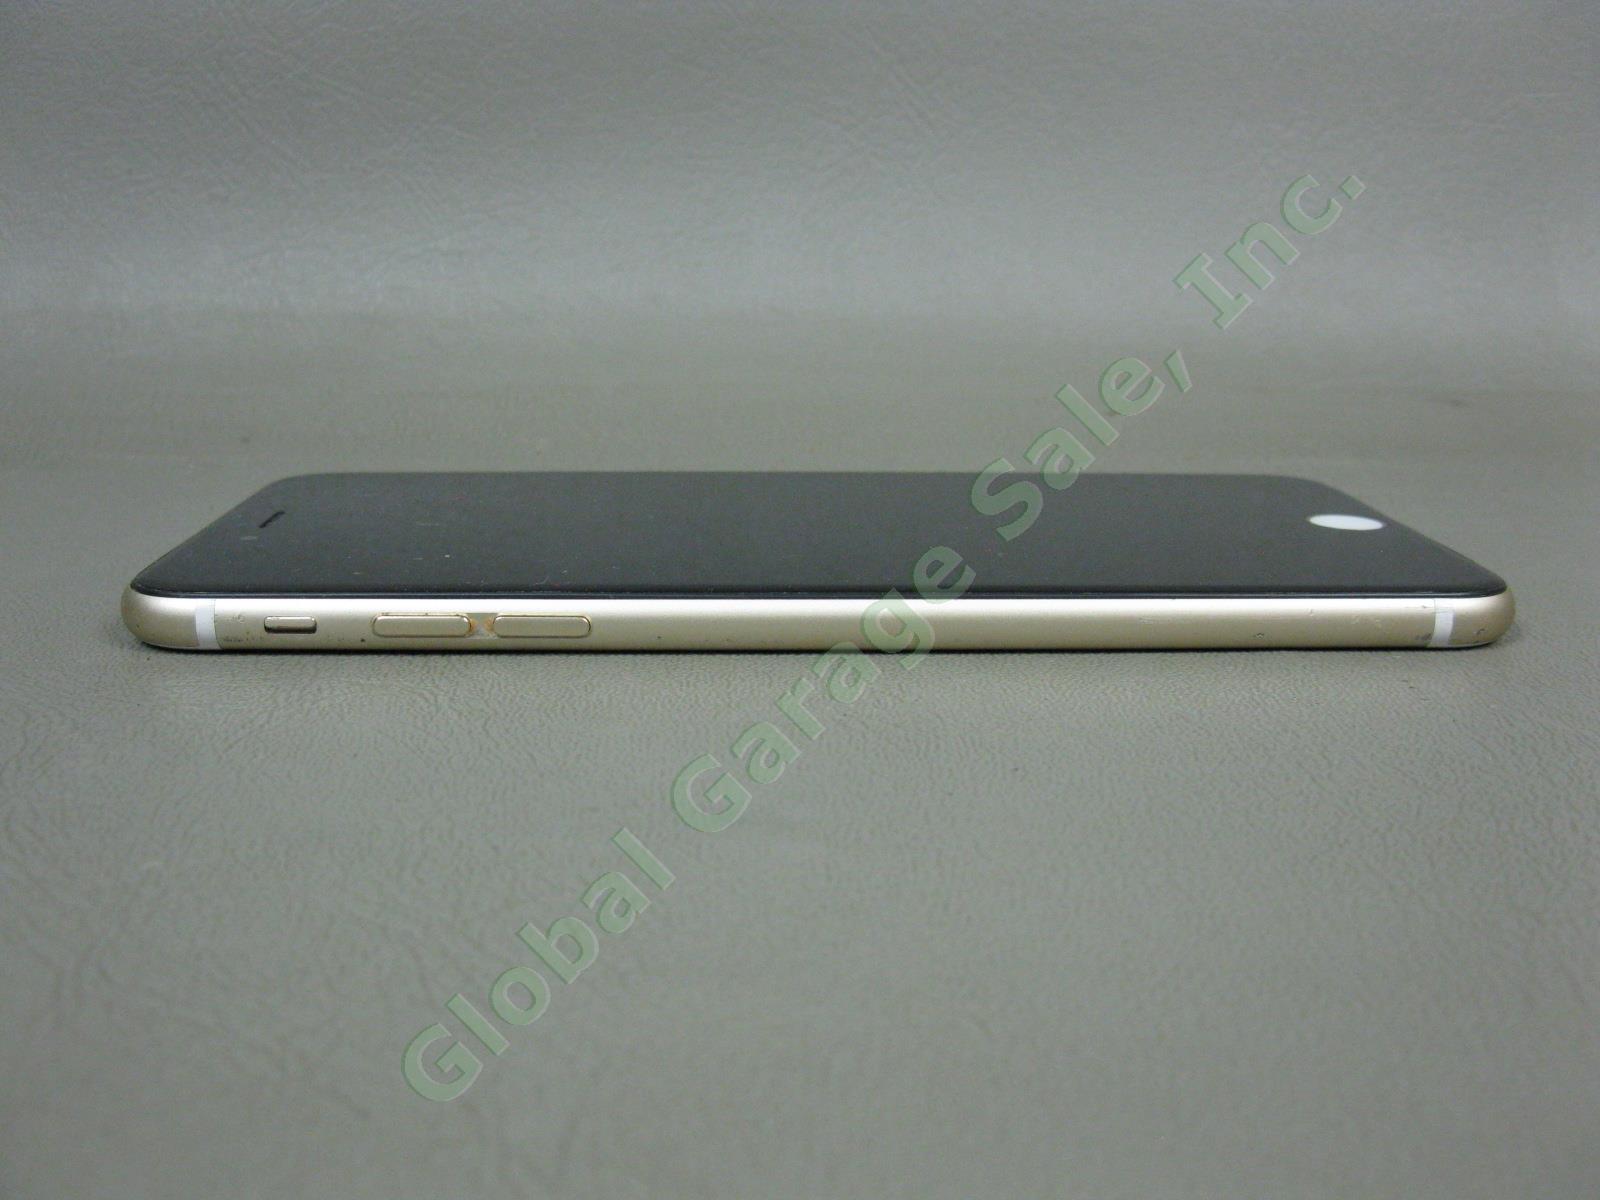 Apple iPhone 6 Plus Black 128GB A1522 MGCQ2LL/A Verizon Works Great No Reserve! 6